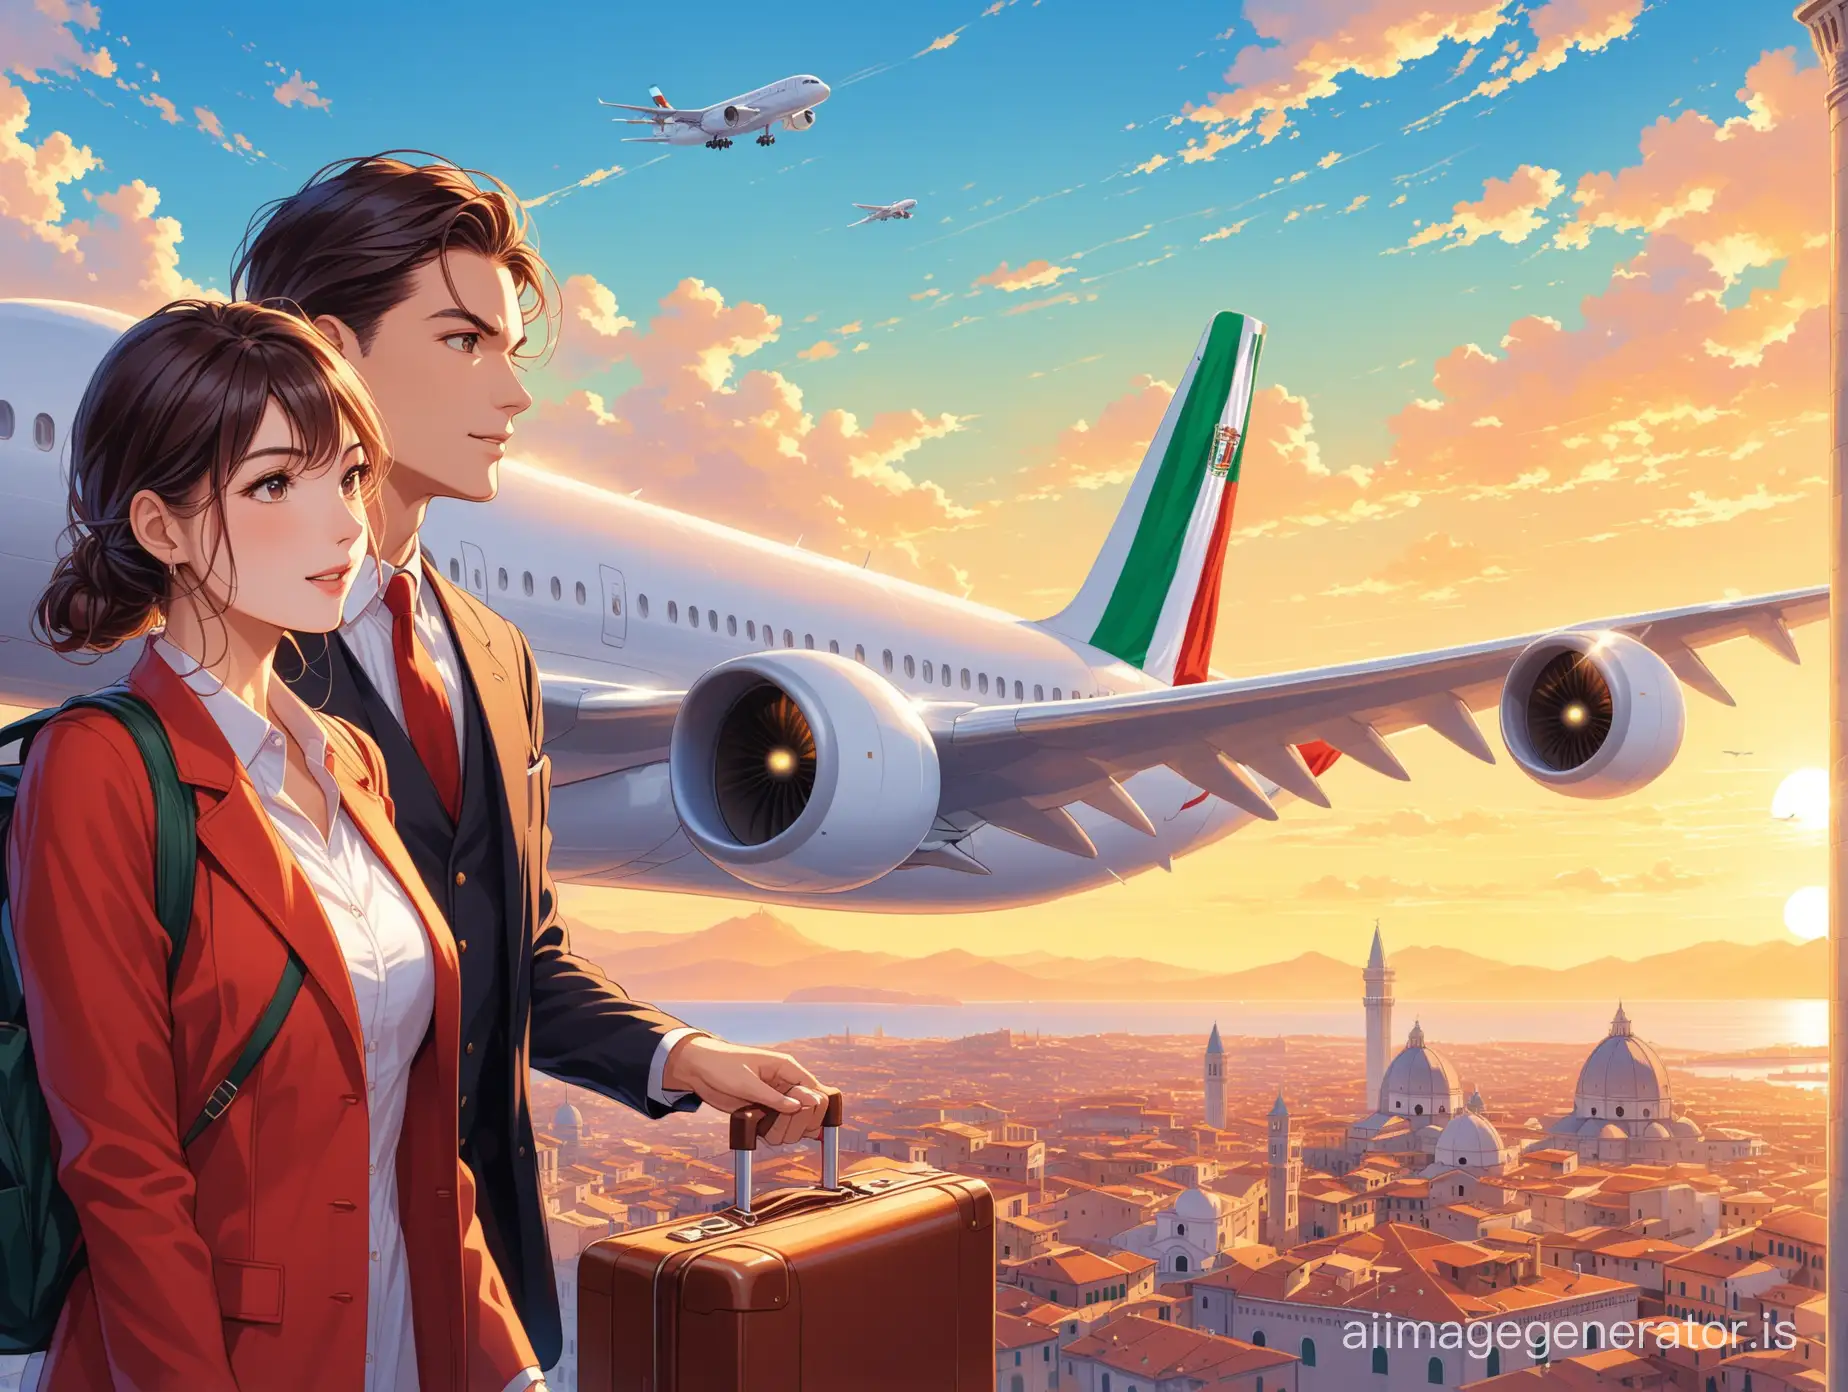 Excursion-Women-and-Men-Enjoying-a-Flight-to-Italy